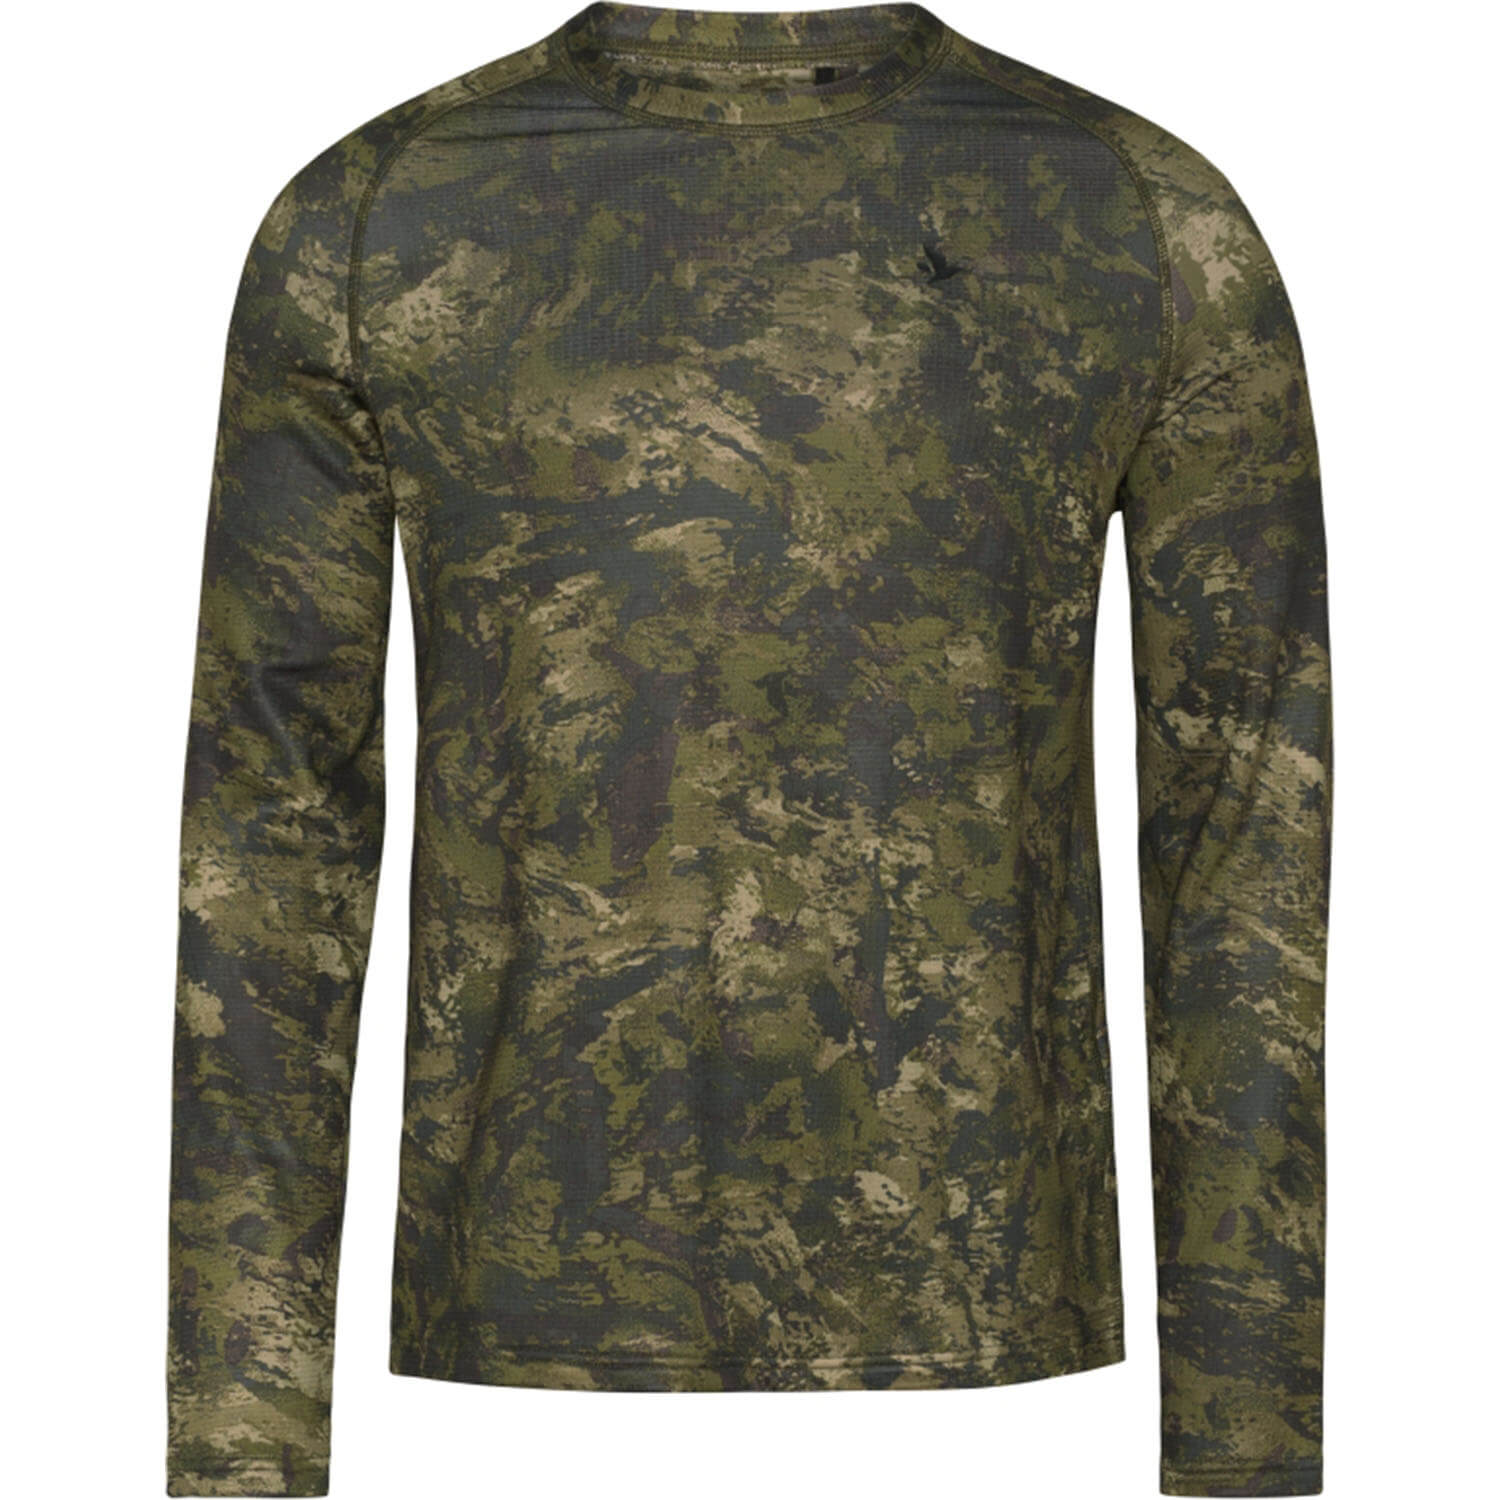  Seeland Active shirt met lange mouwen (Invis) - Camouflageshirts